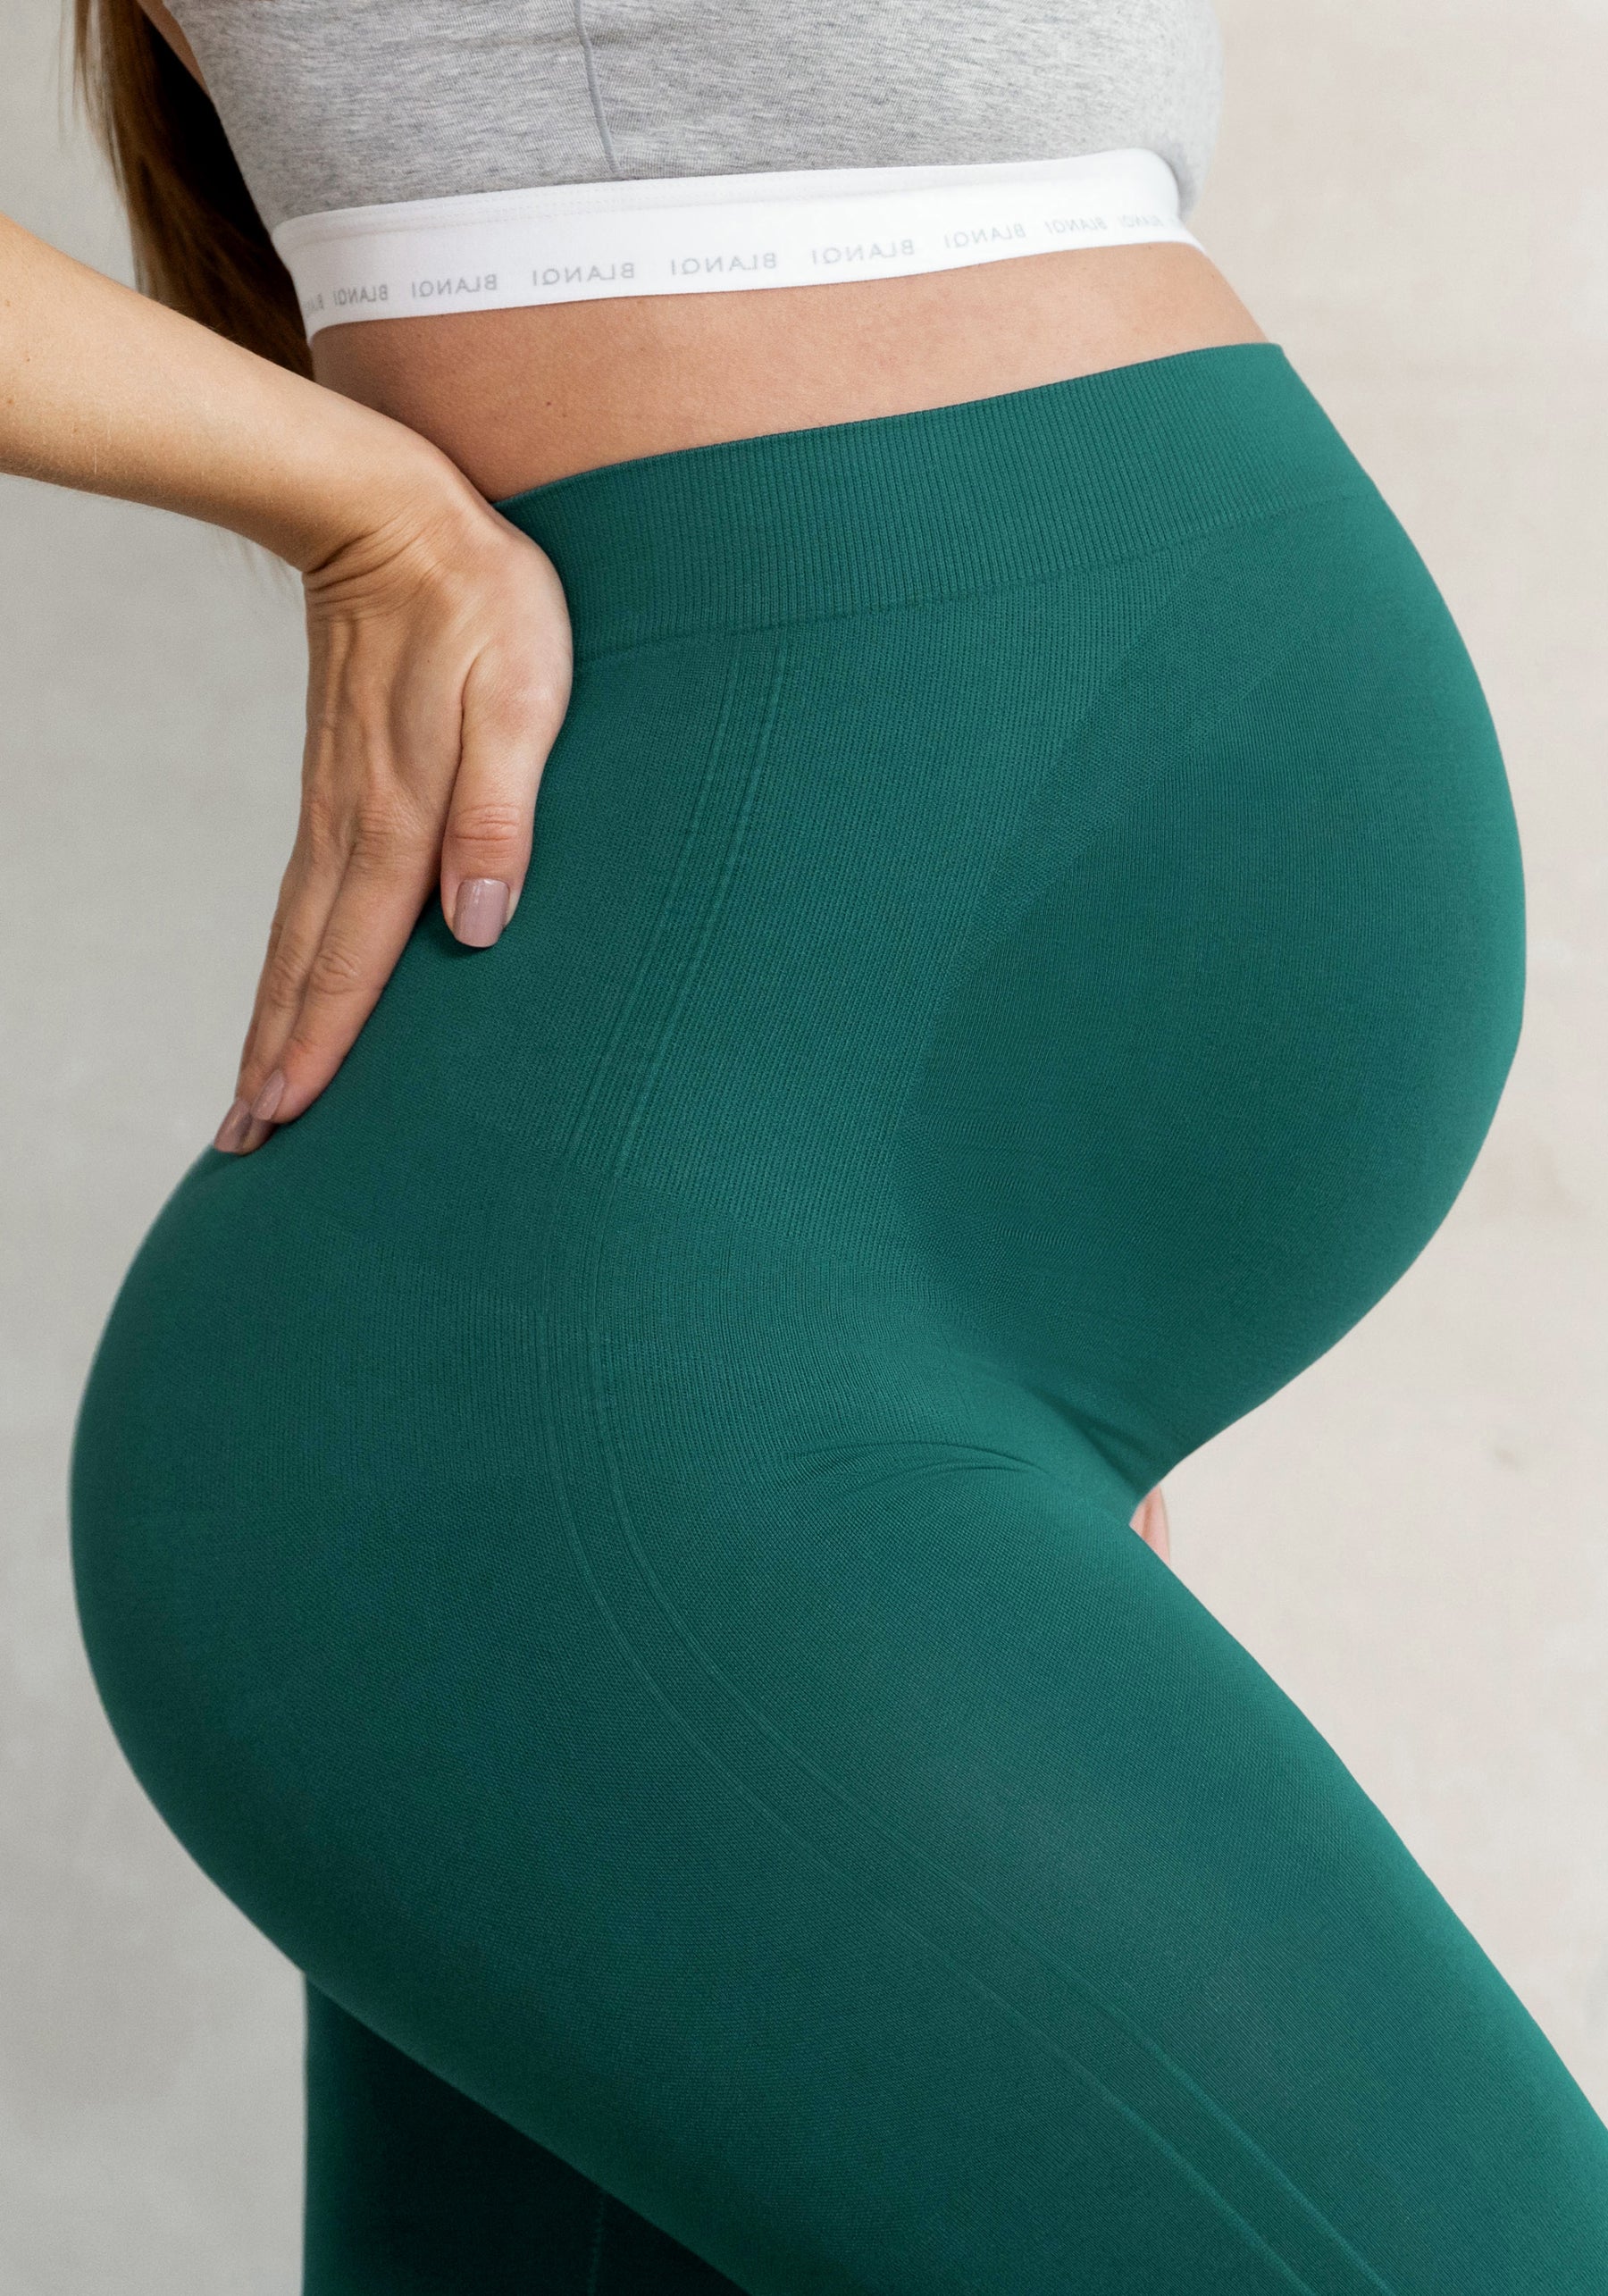 Viosi Maternity Leggings Over The Belly Soft Stretch Pregnancy